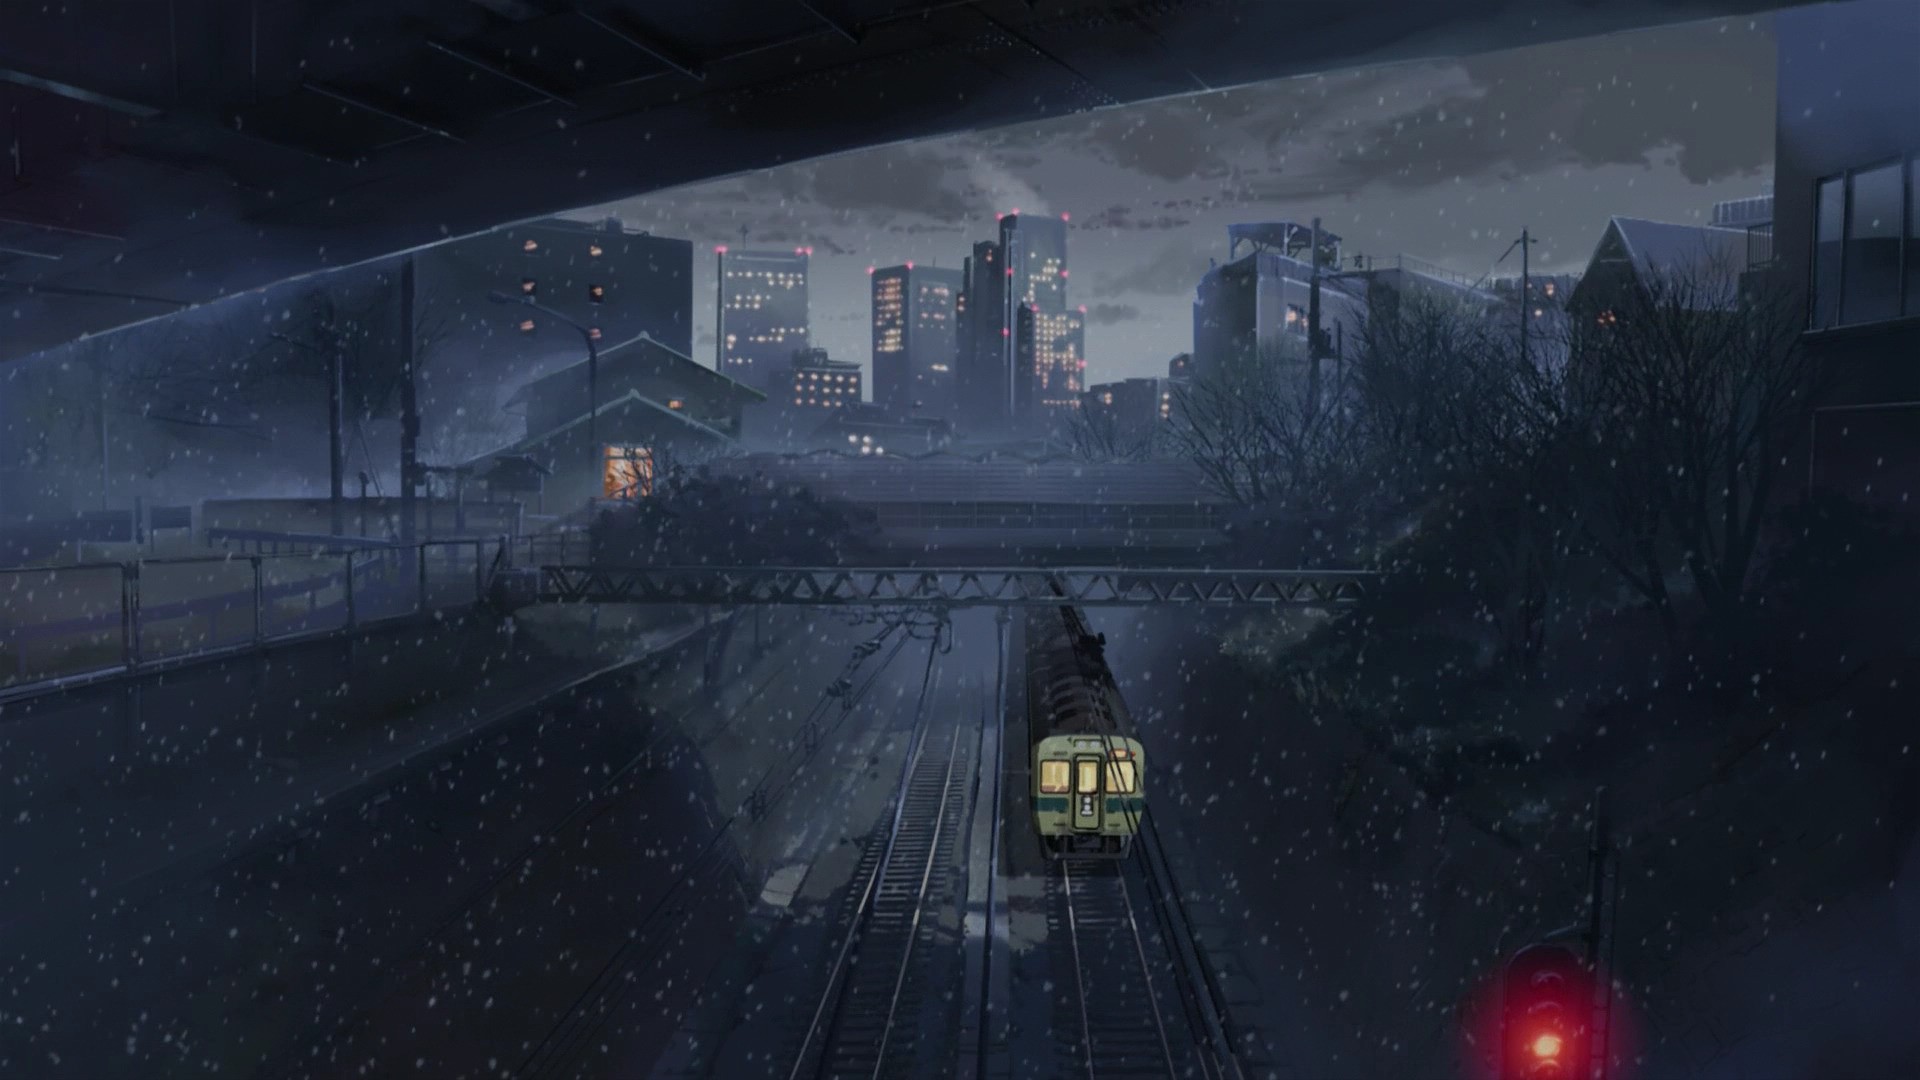 1920x1080 train night city anime 5 centimeters per second wallpaper JPG 232 kB